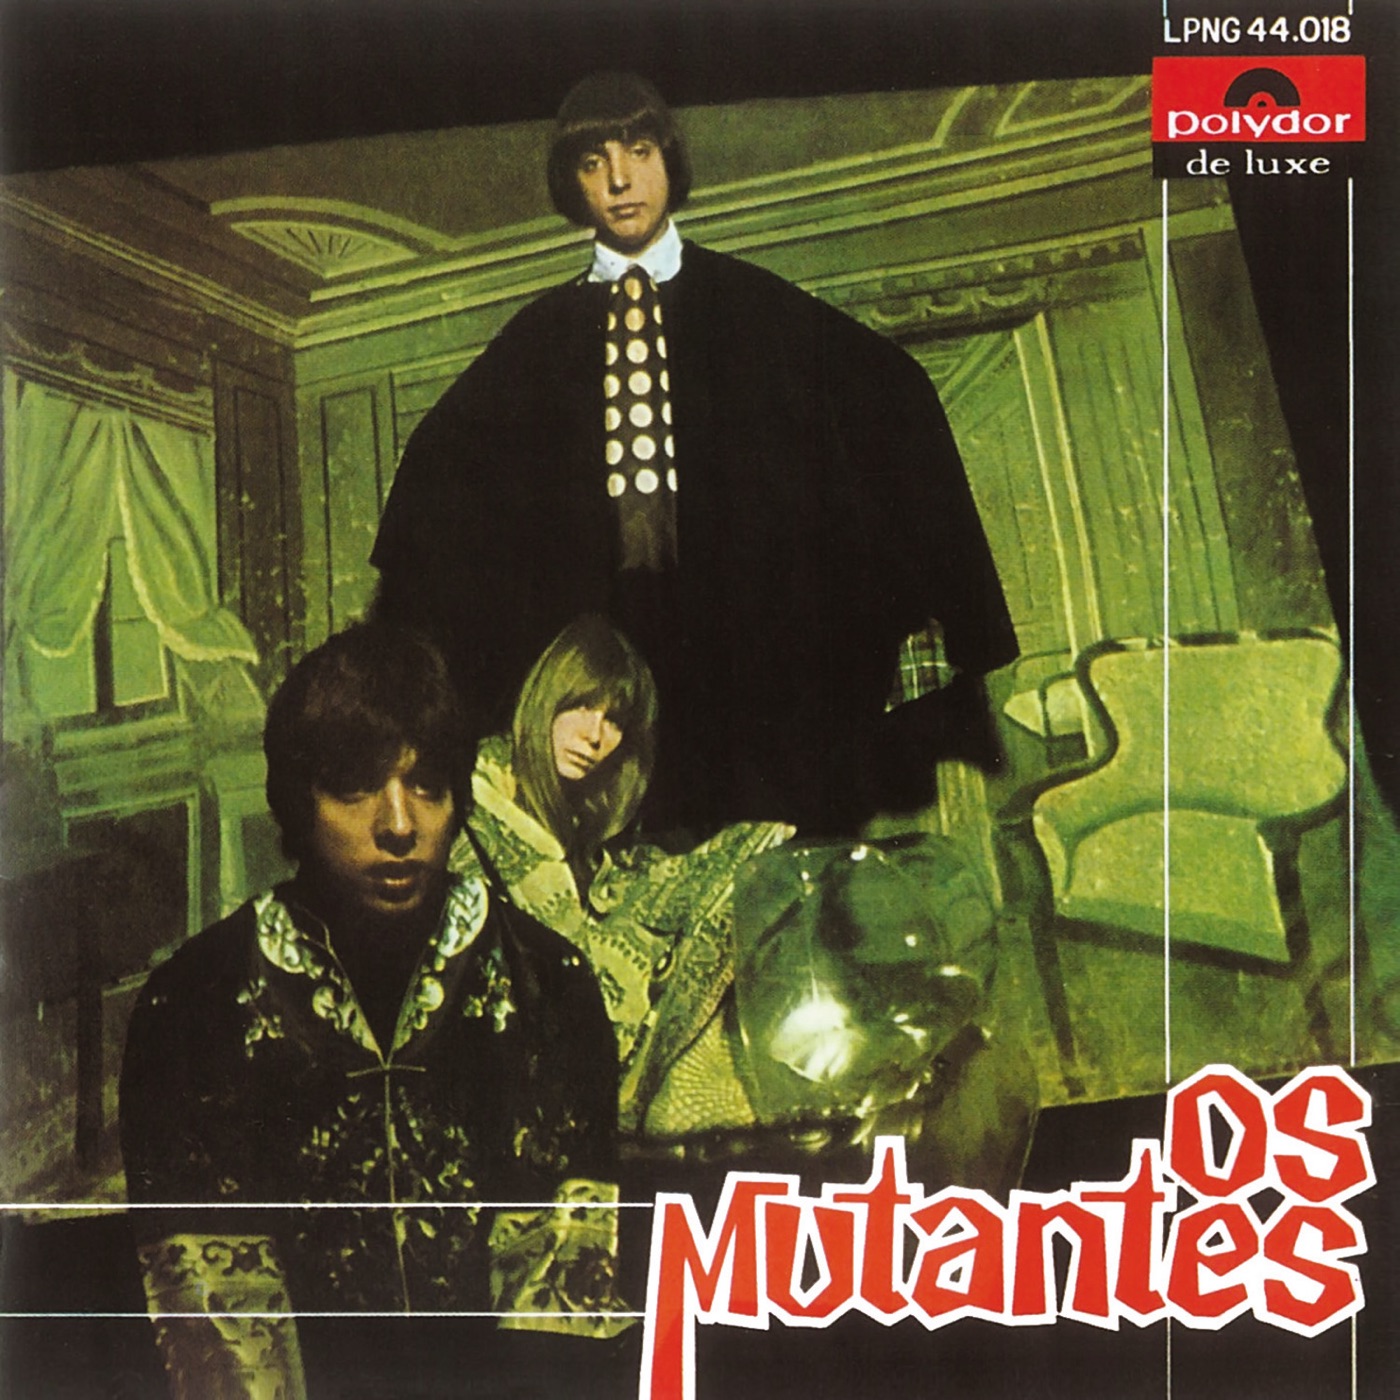 "Os Mutantes" by Os Mutantes